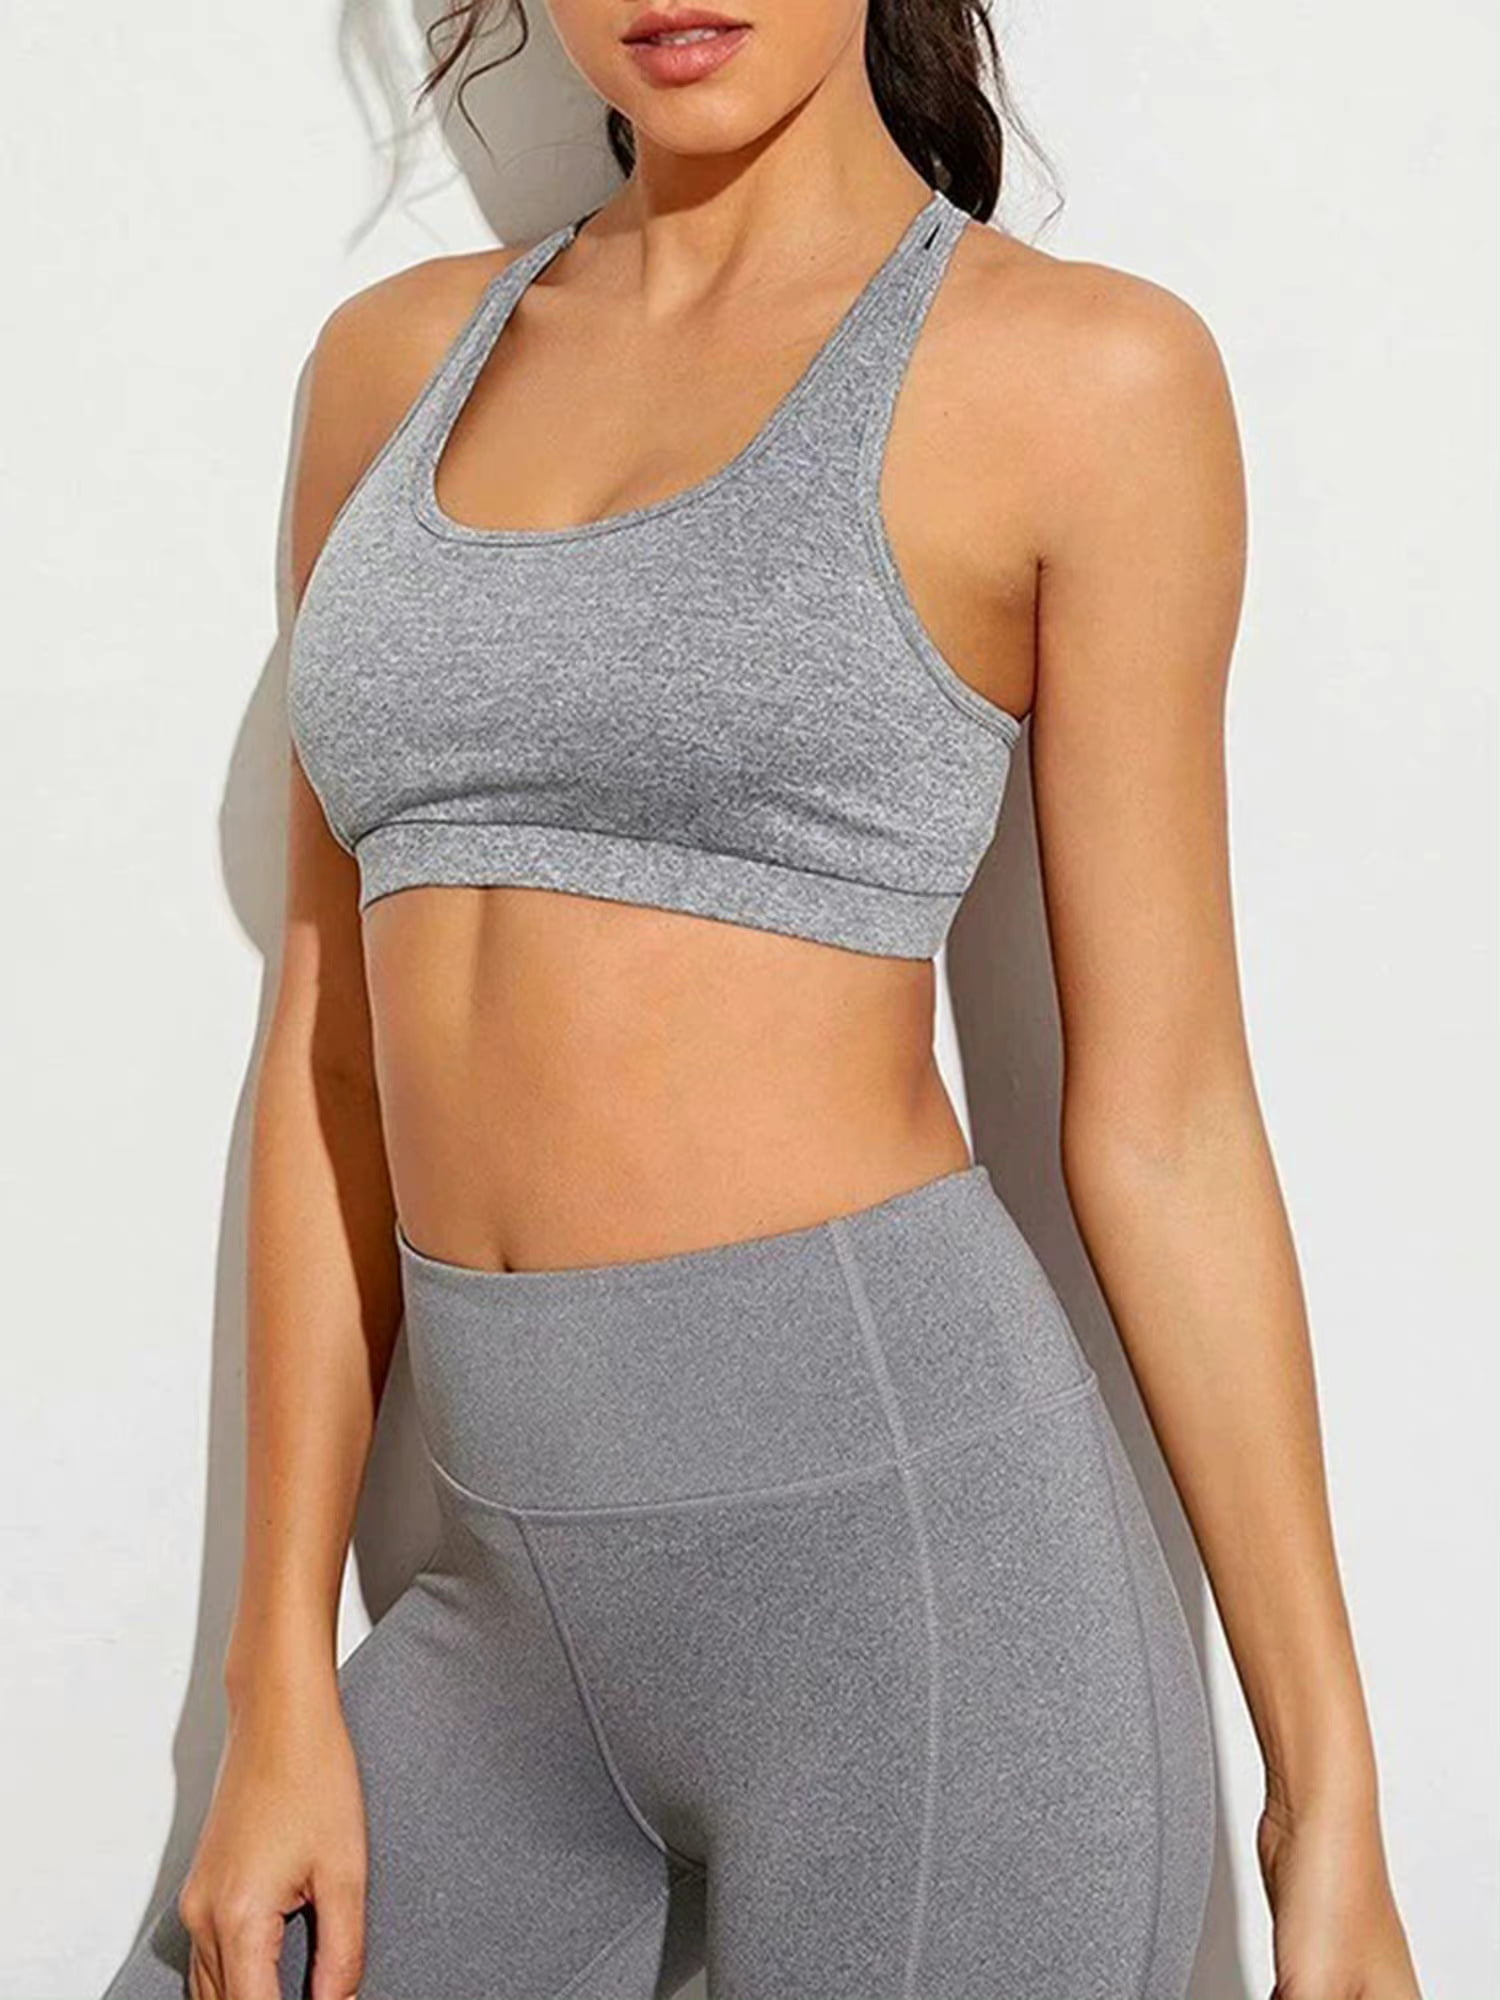 Tapsier Womens Sports Running Gym Yoga Bra Stretch Padded Fitness Workout  Tank Top Underwear - Walmart.com